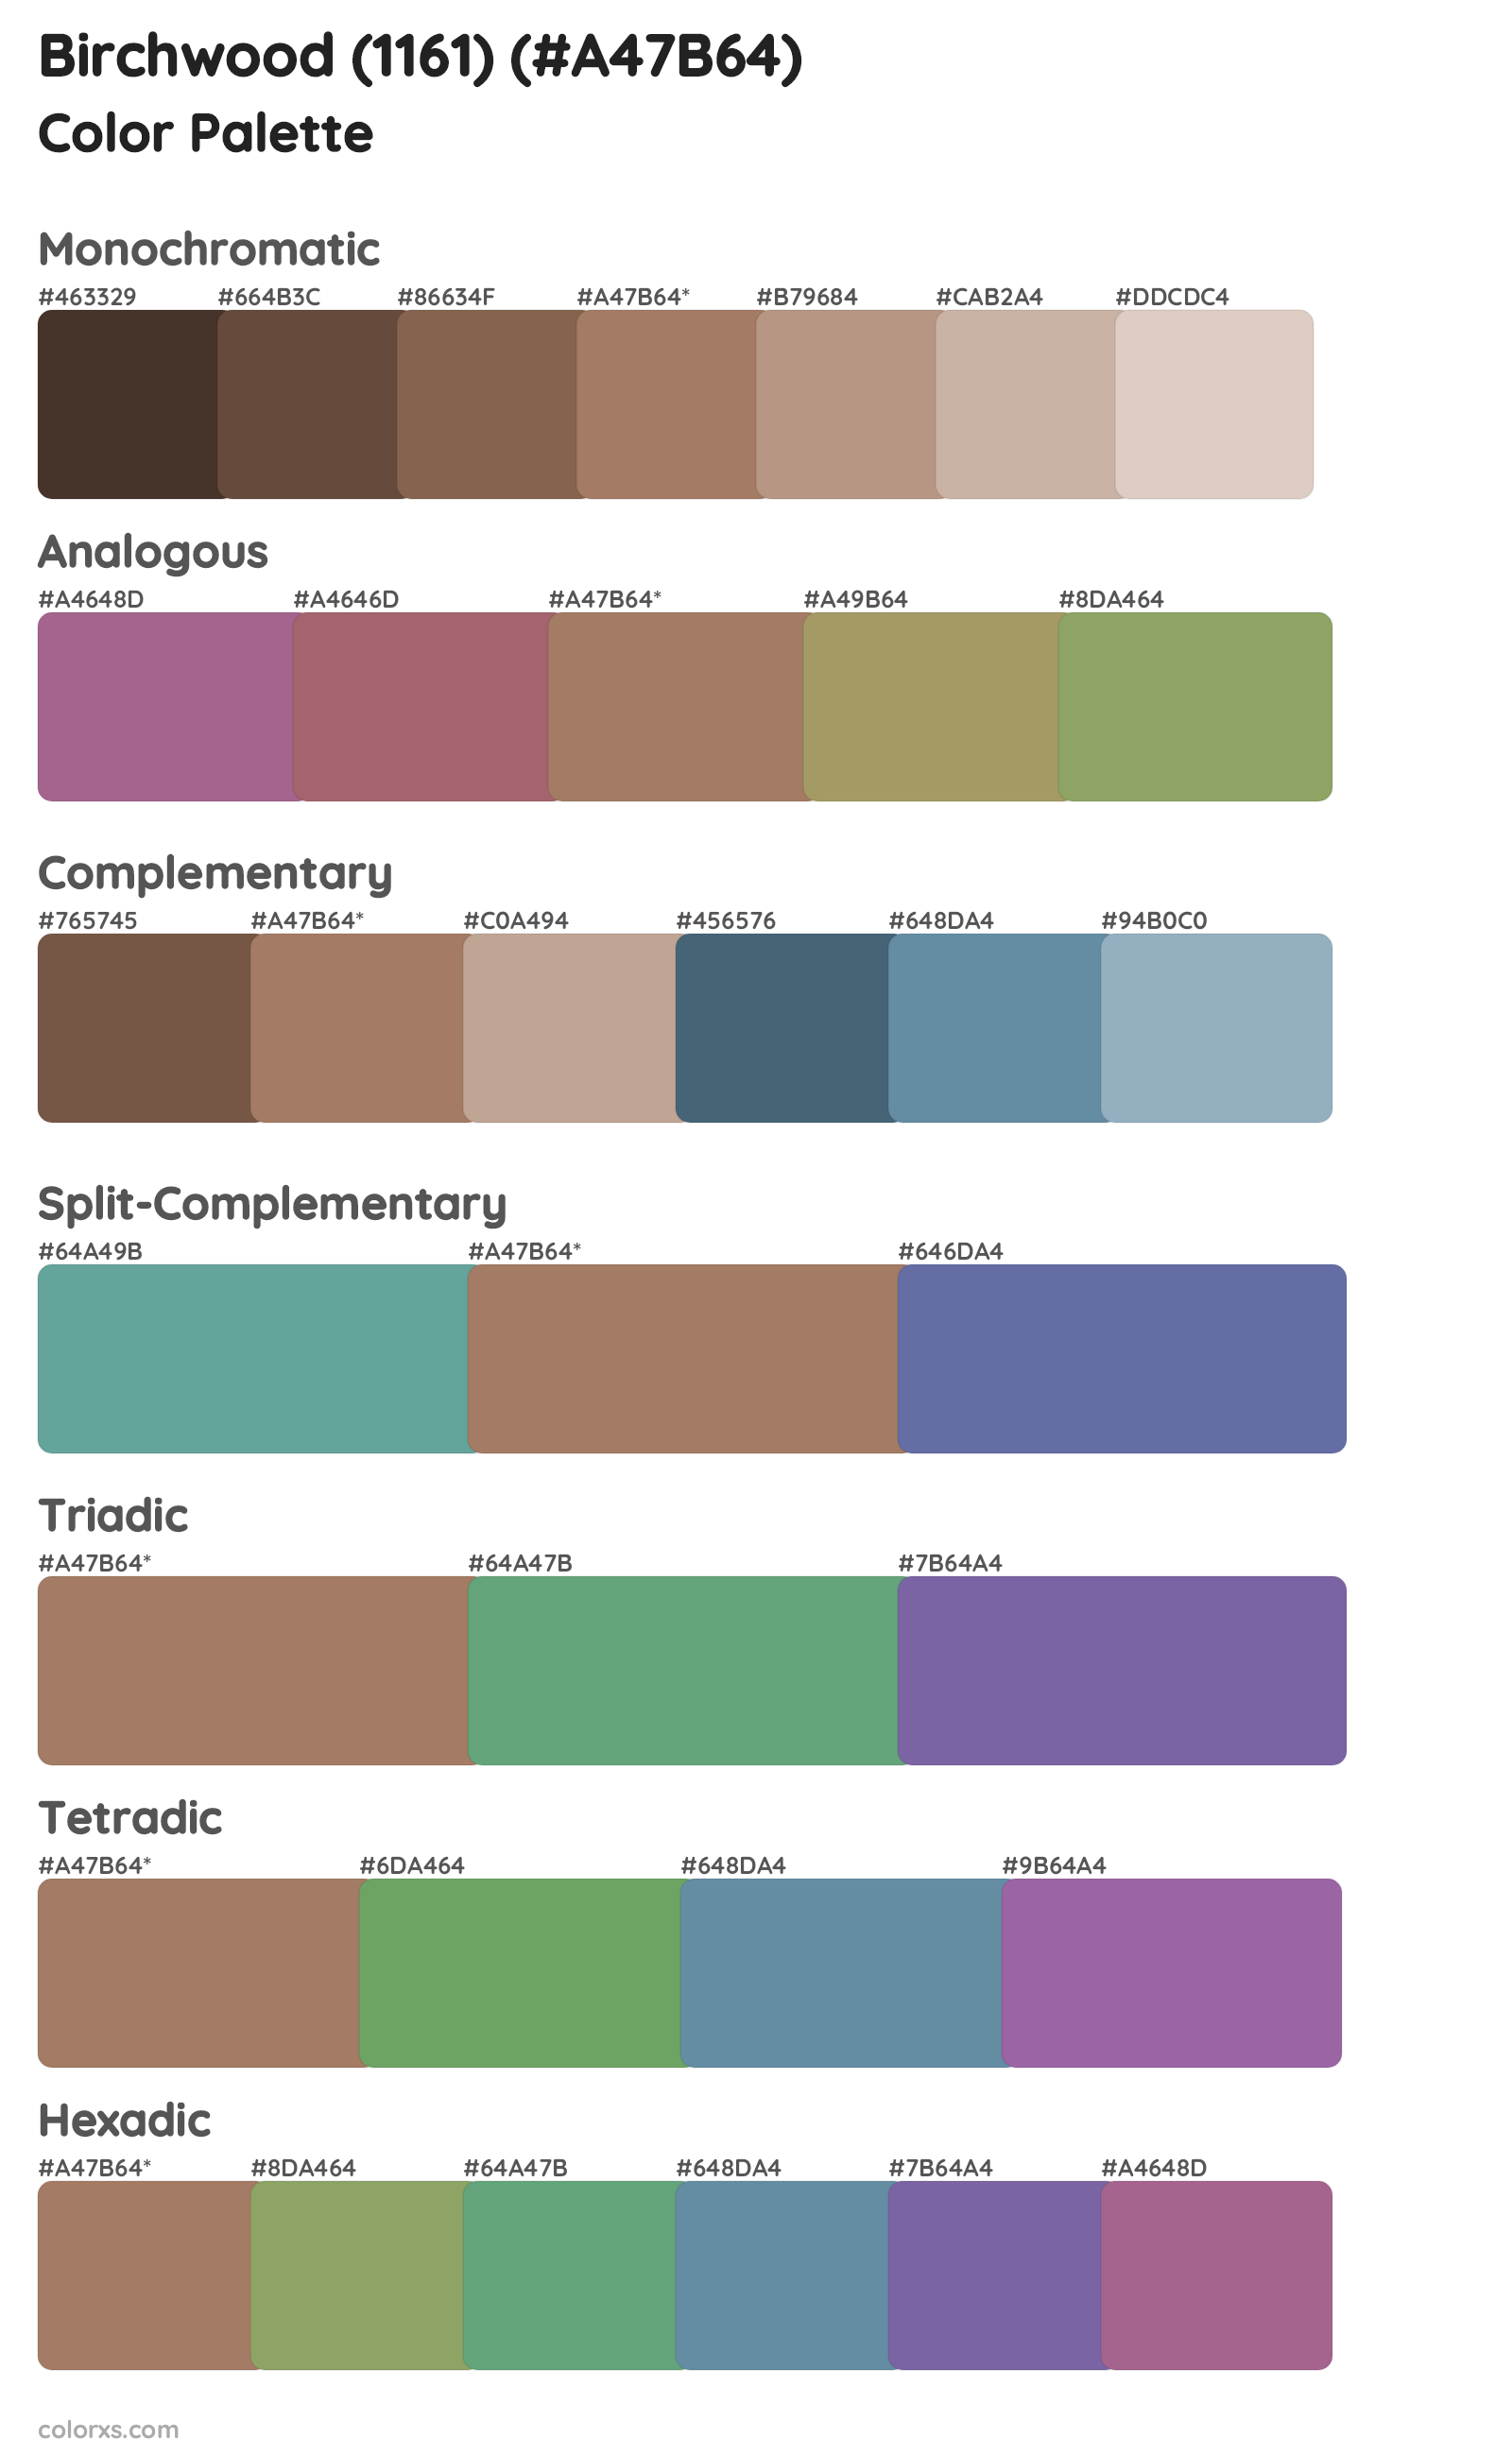 Birchwood (1161) Color Scheme Palettes